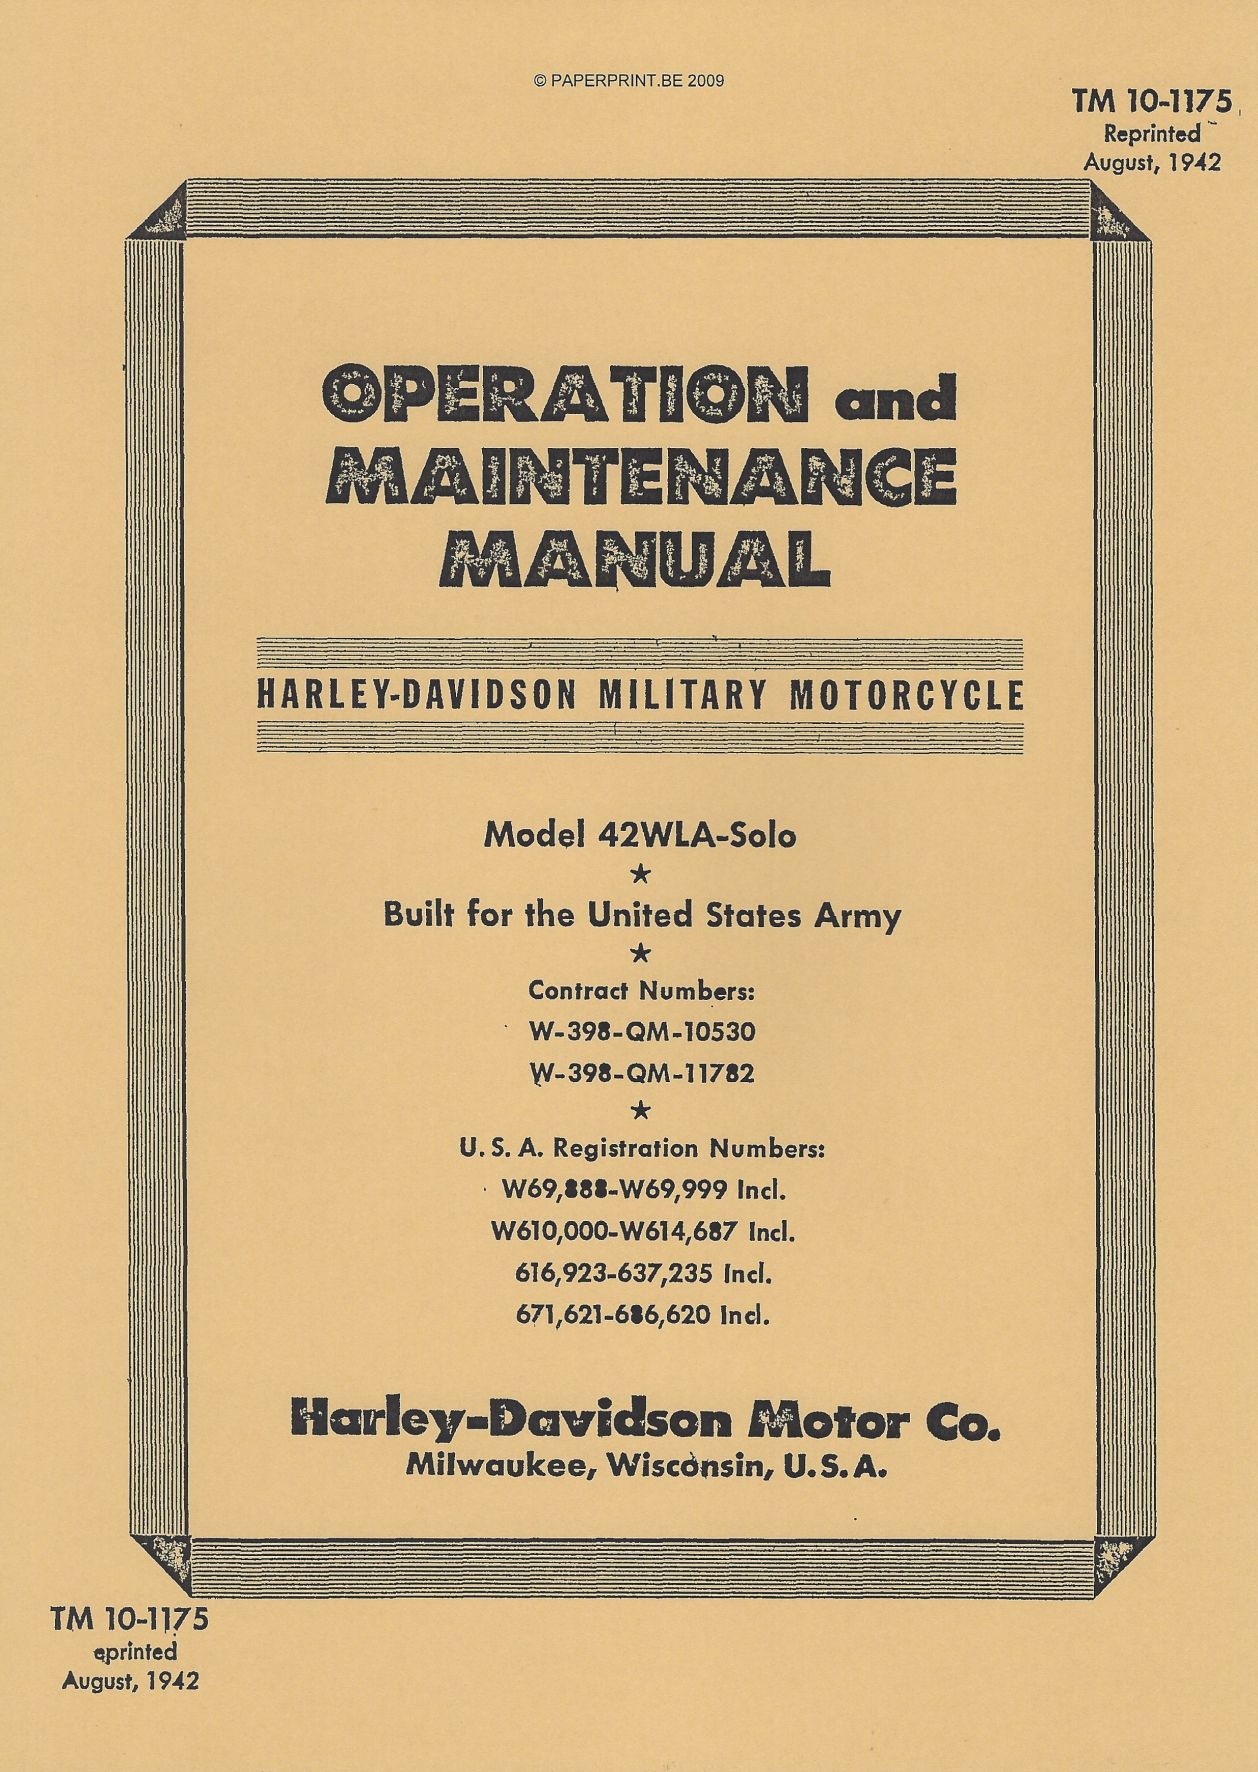 TM 10-1175 US OPERATION AND MAINTENANCE MANUAL HARLEY-DAVIDSON MILITARY MOTORCYCLE  MODEL 42WLA-SOLO